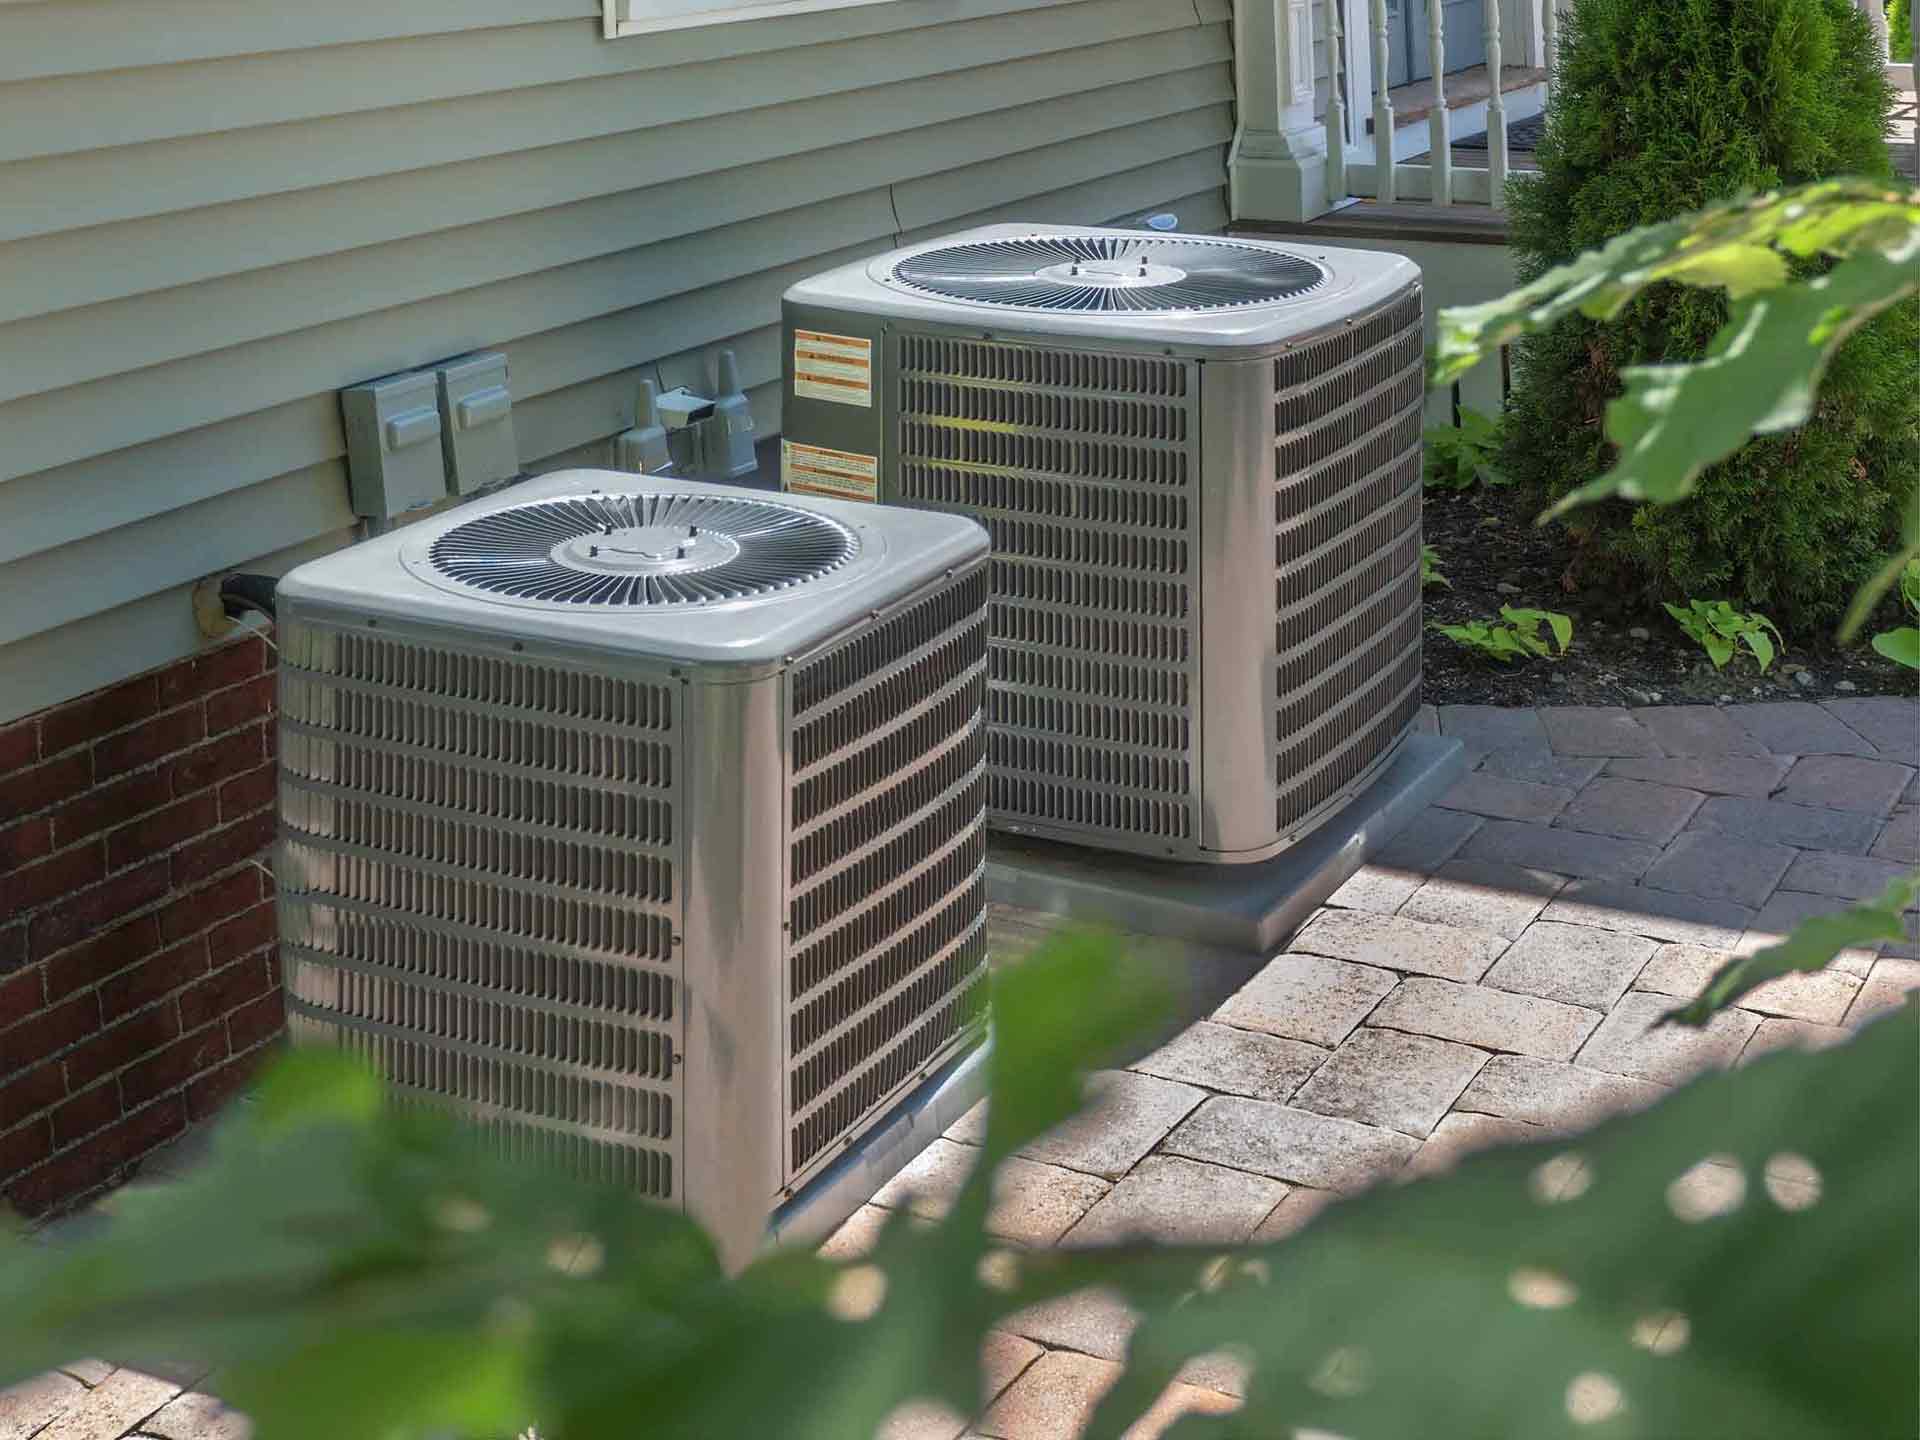 r50-air-conditioner-heat-pump-units-outside-home-16825485870766.jpg